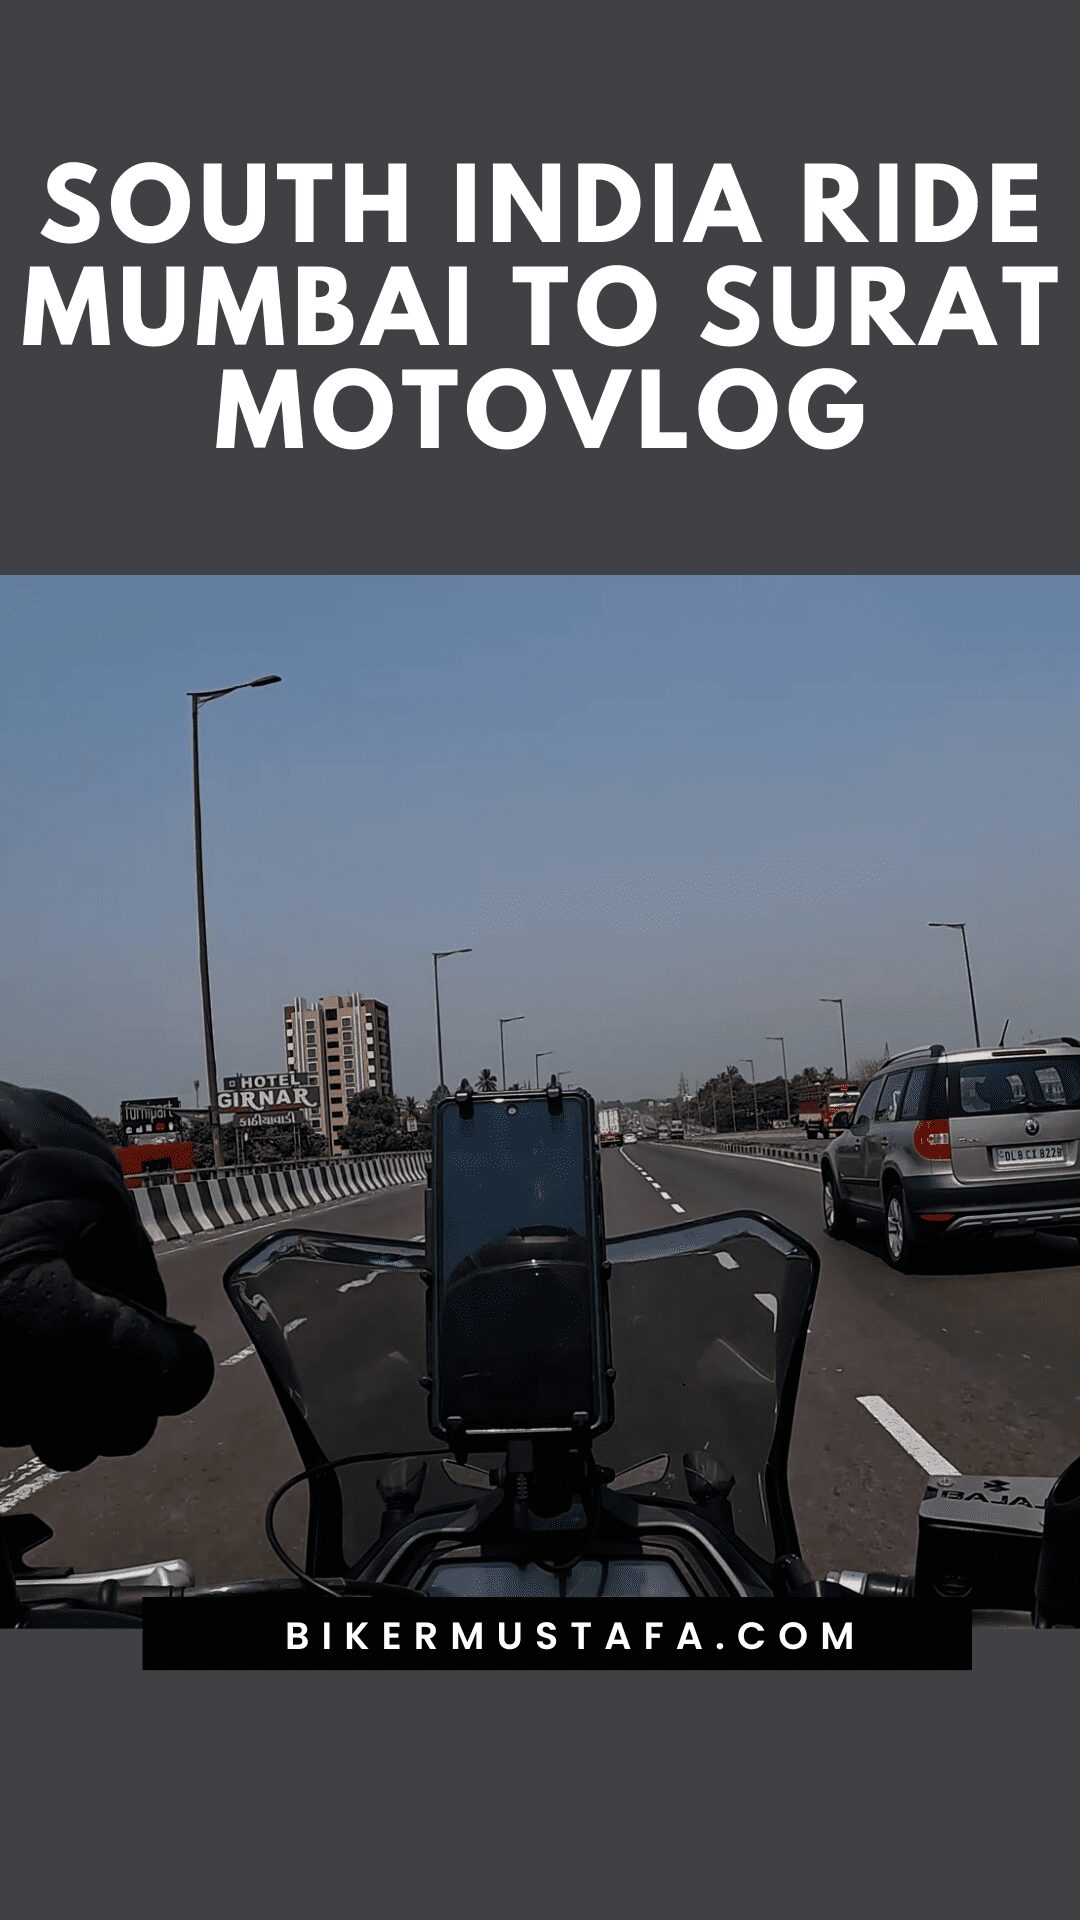 South India Ride Mumbai to Surat Motovlog